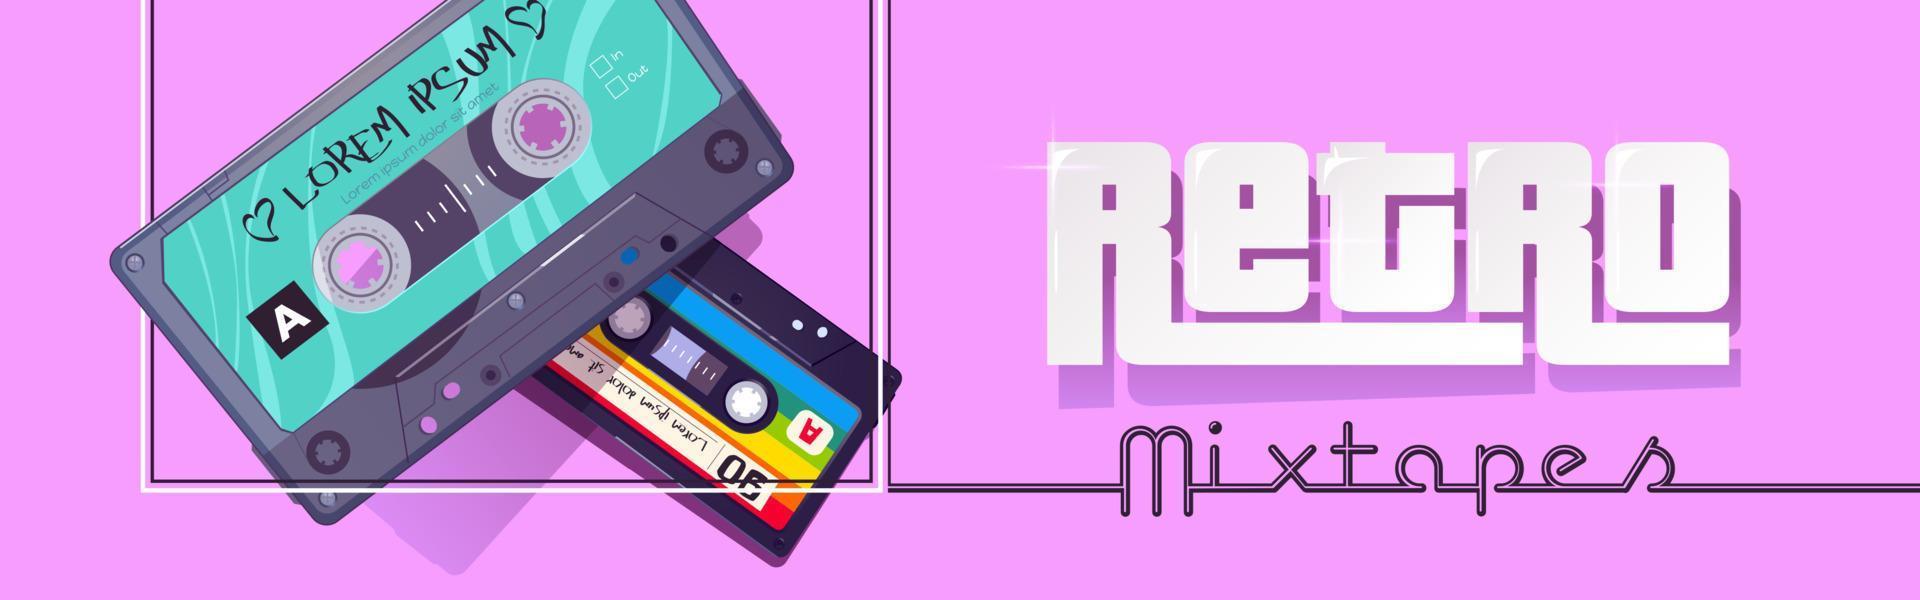 Retro mixtapes cartoon banner, audio player vector